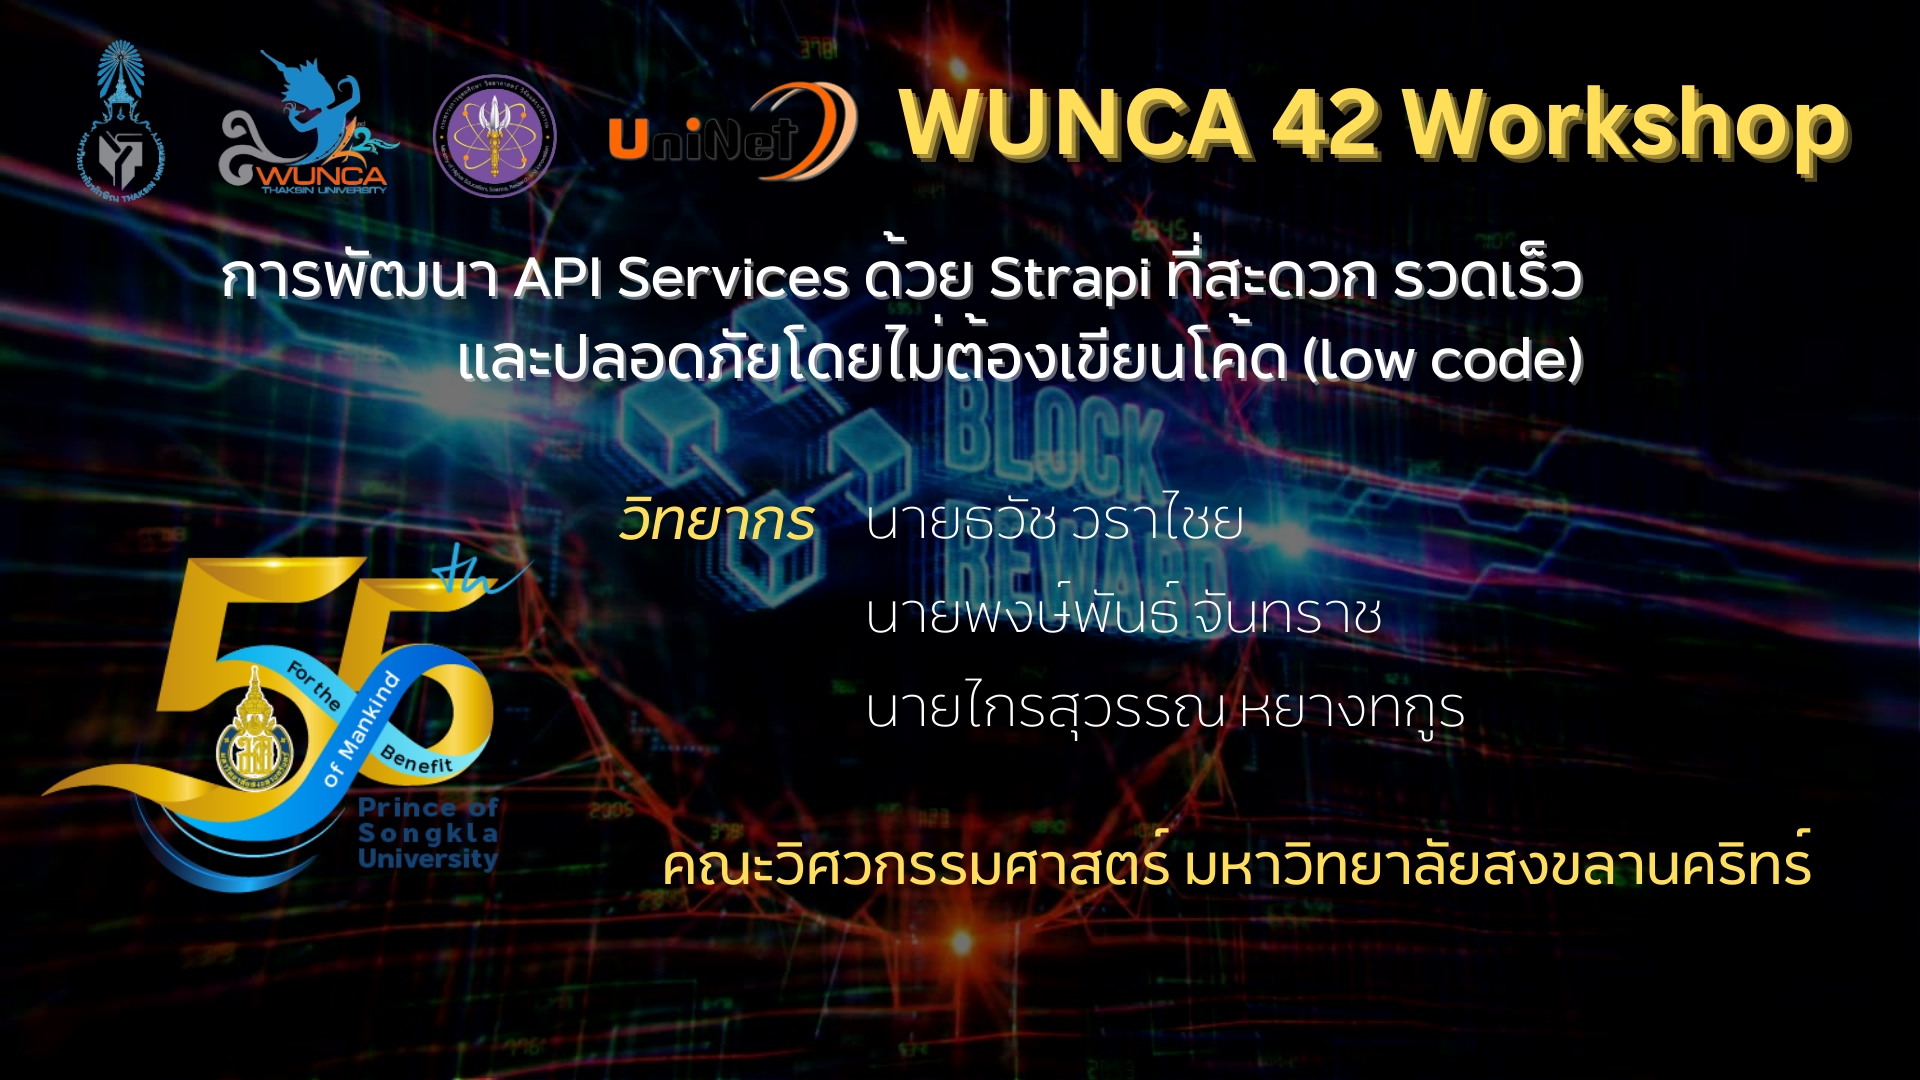 WUNCA 42 Workshop : การพัฒนา API Services ด้วย Strapi ที่สะดวก รวดเร็วและปลอดภัยโดยไม่ต้องเขียนโค้ด(Low-code)